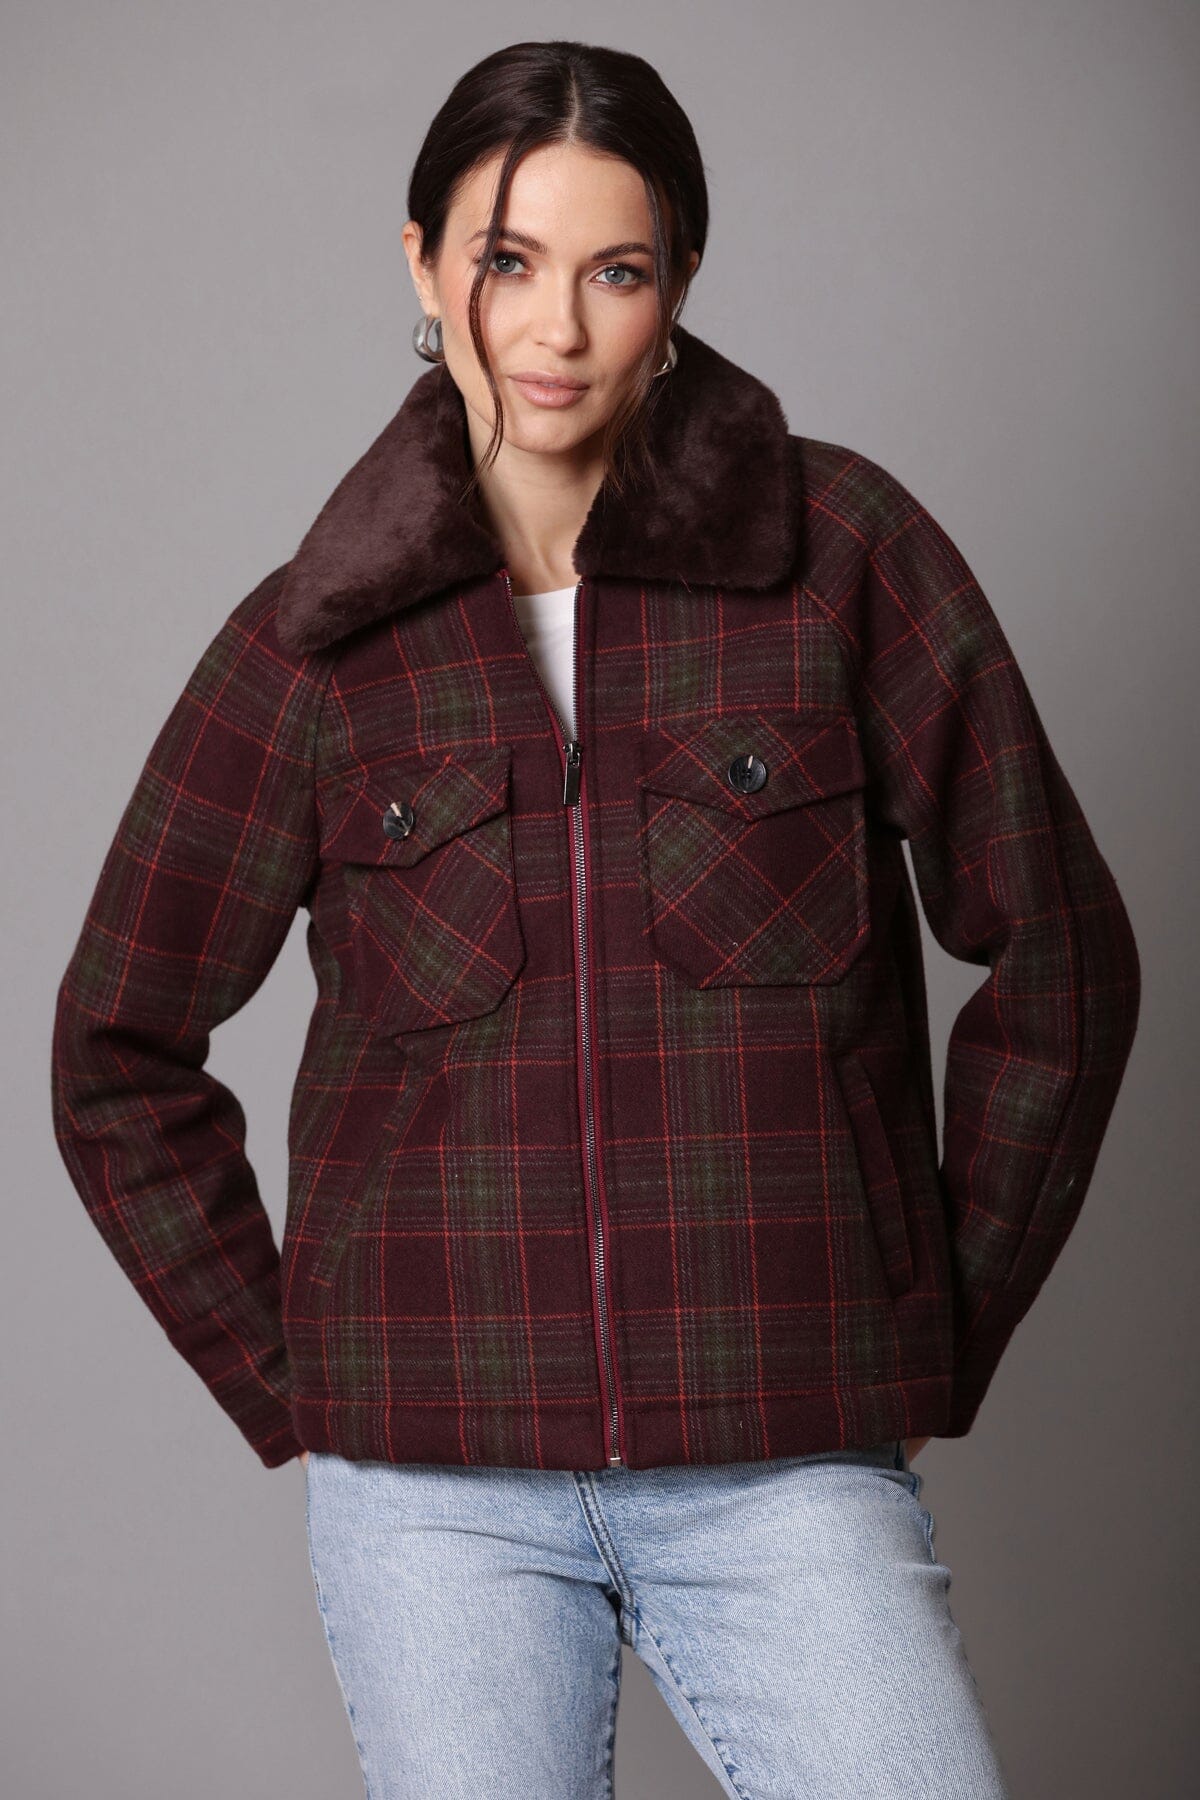 Maroon plaid zip-front faux fur collared jacket coat - cute figure flattering women's jackets for fall